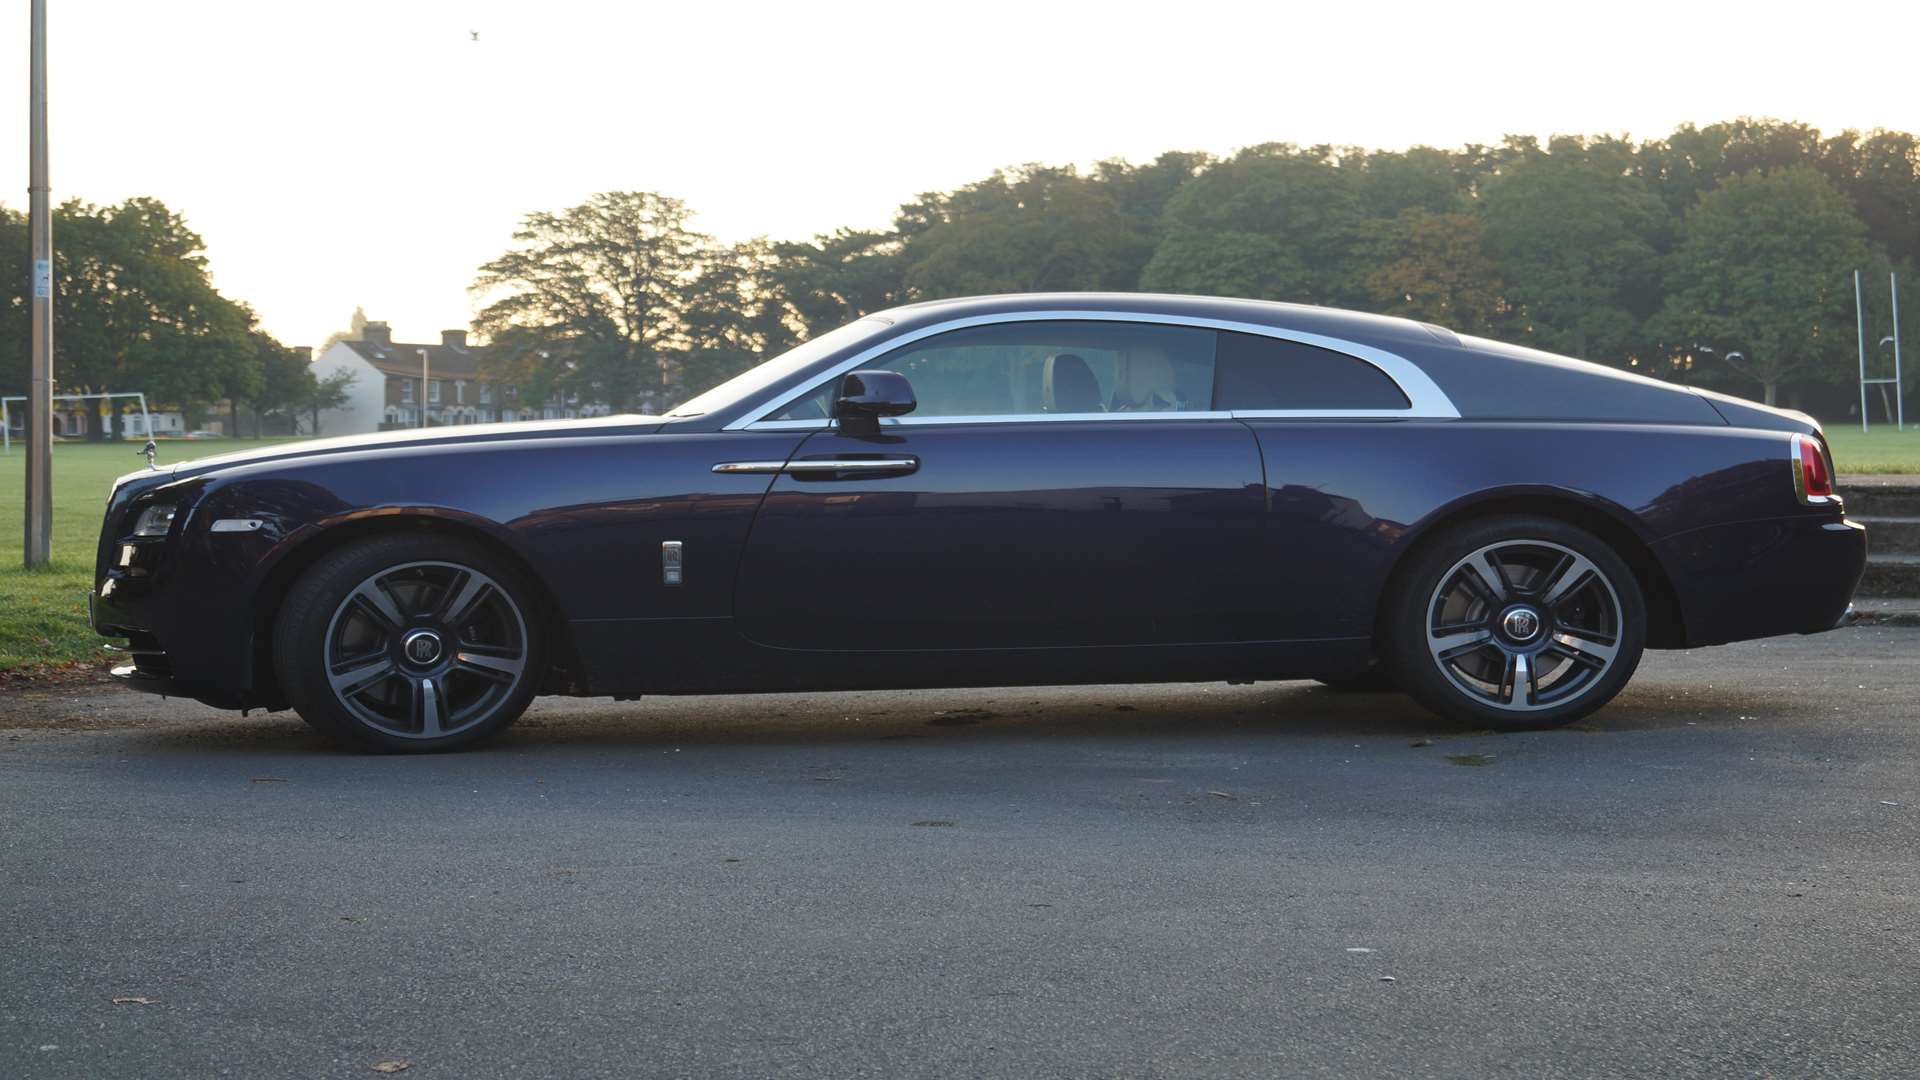 The two-door fastback body is unmistakeably Rolls-Royce